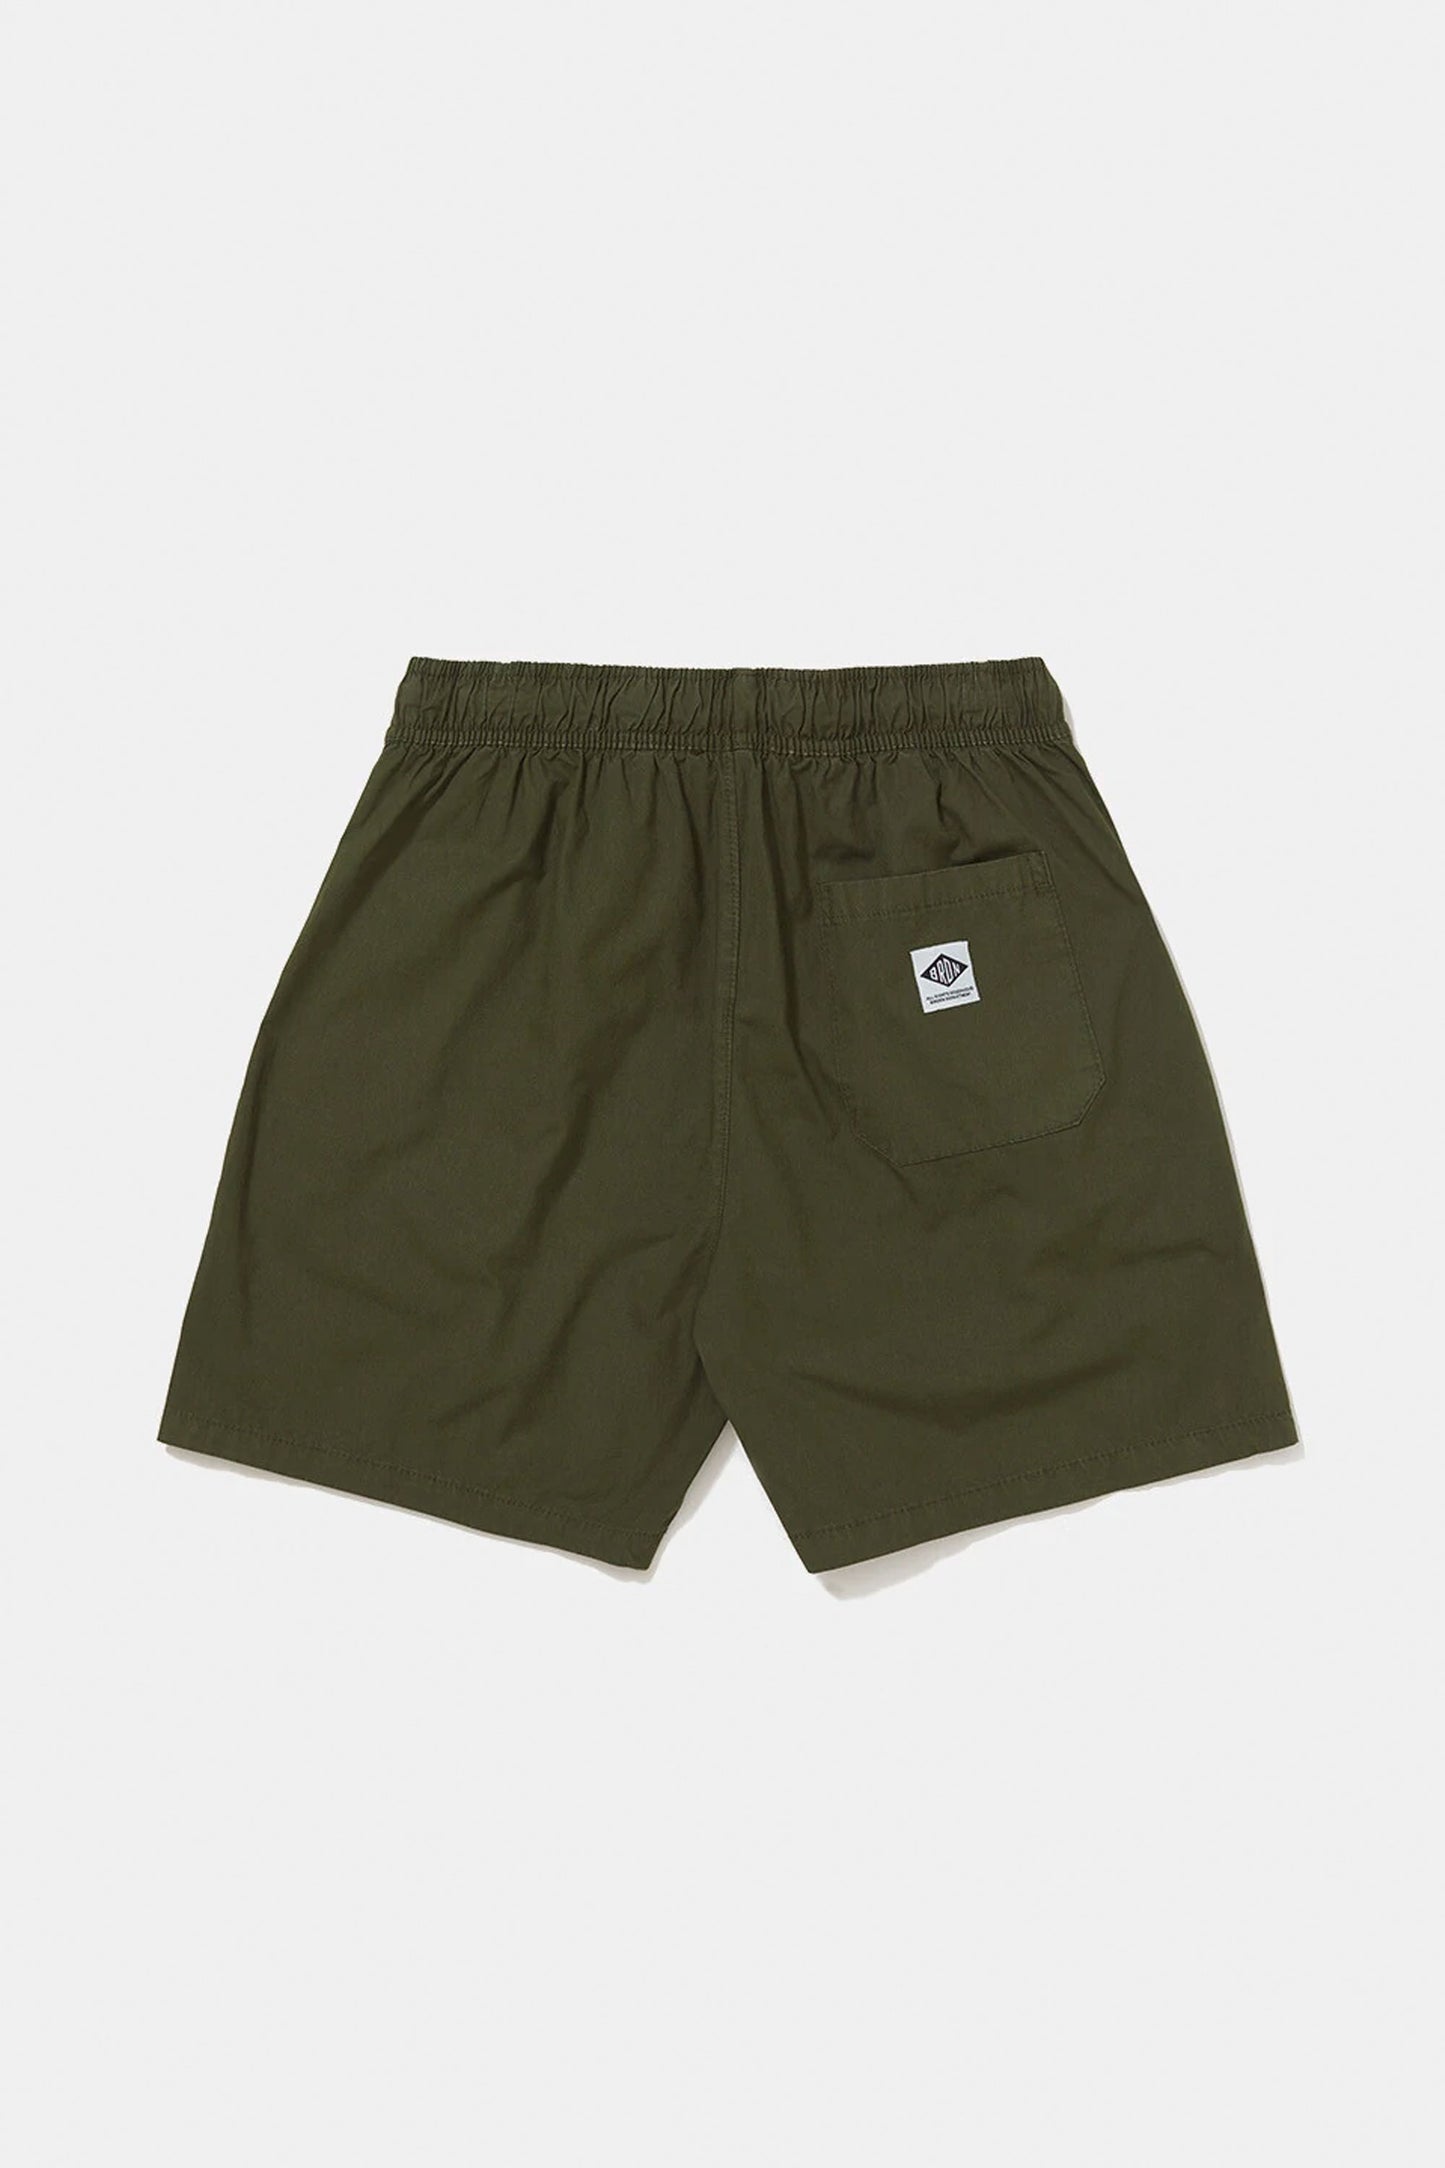 
                  
                    Pukas-surf-shop-man-shorts-shirts-relax-green
                  
                